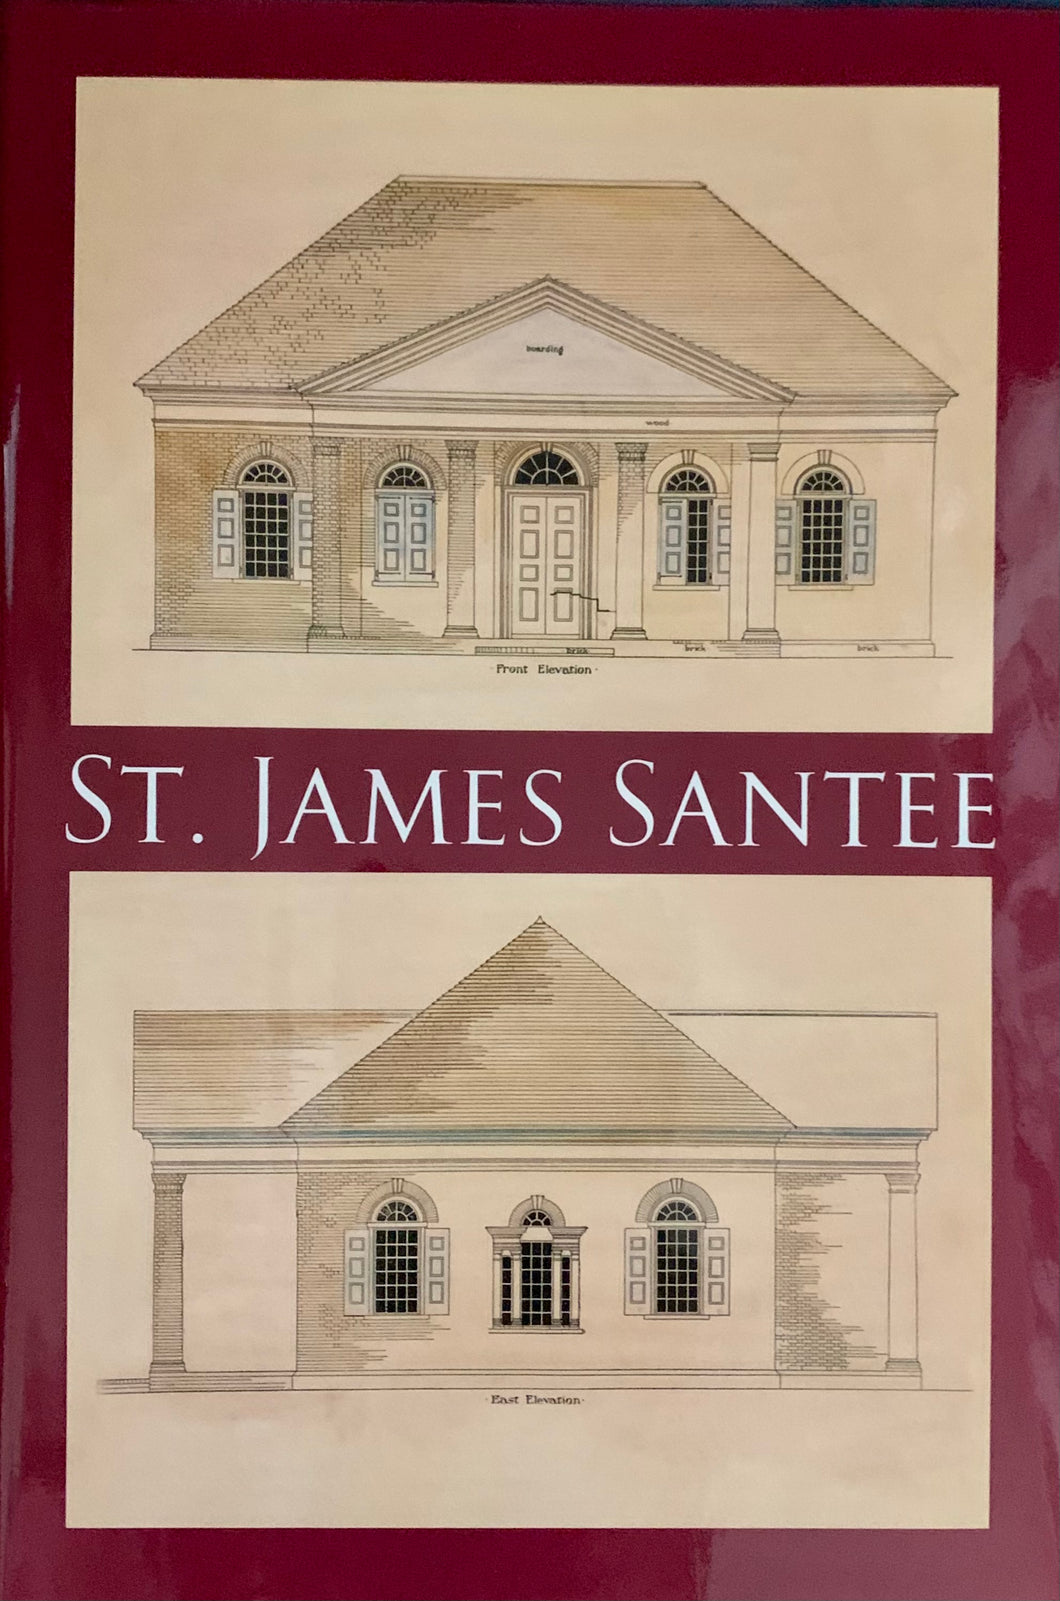 St. James, Santee ~ St. James Santee Brick Church Restoration Committee